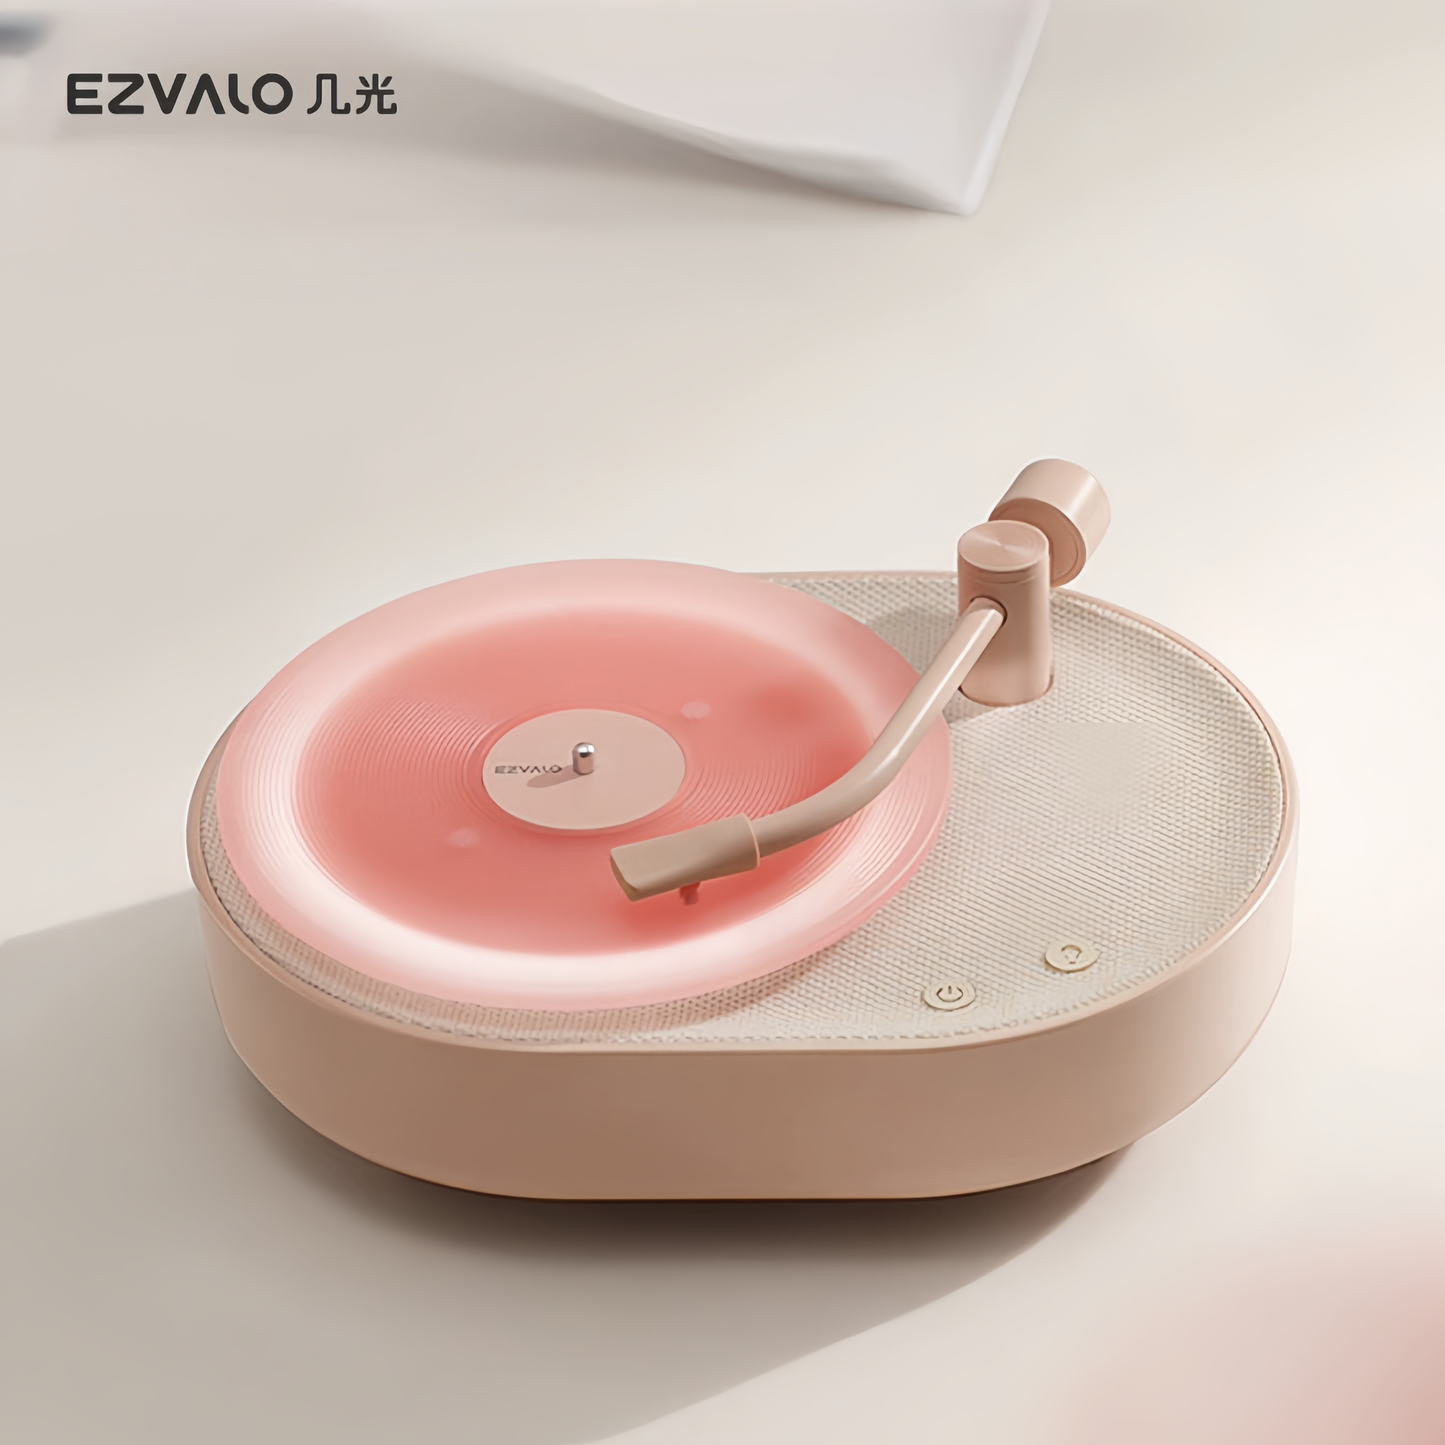 EZVALO Aromatherapy Bluetooth Speaker with Atmosphere Light